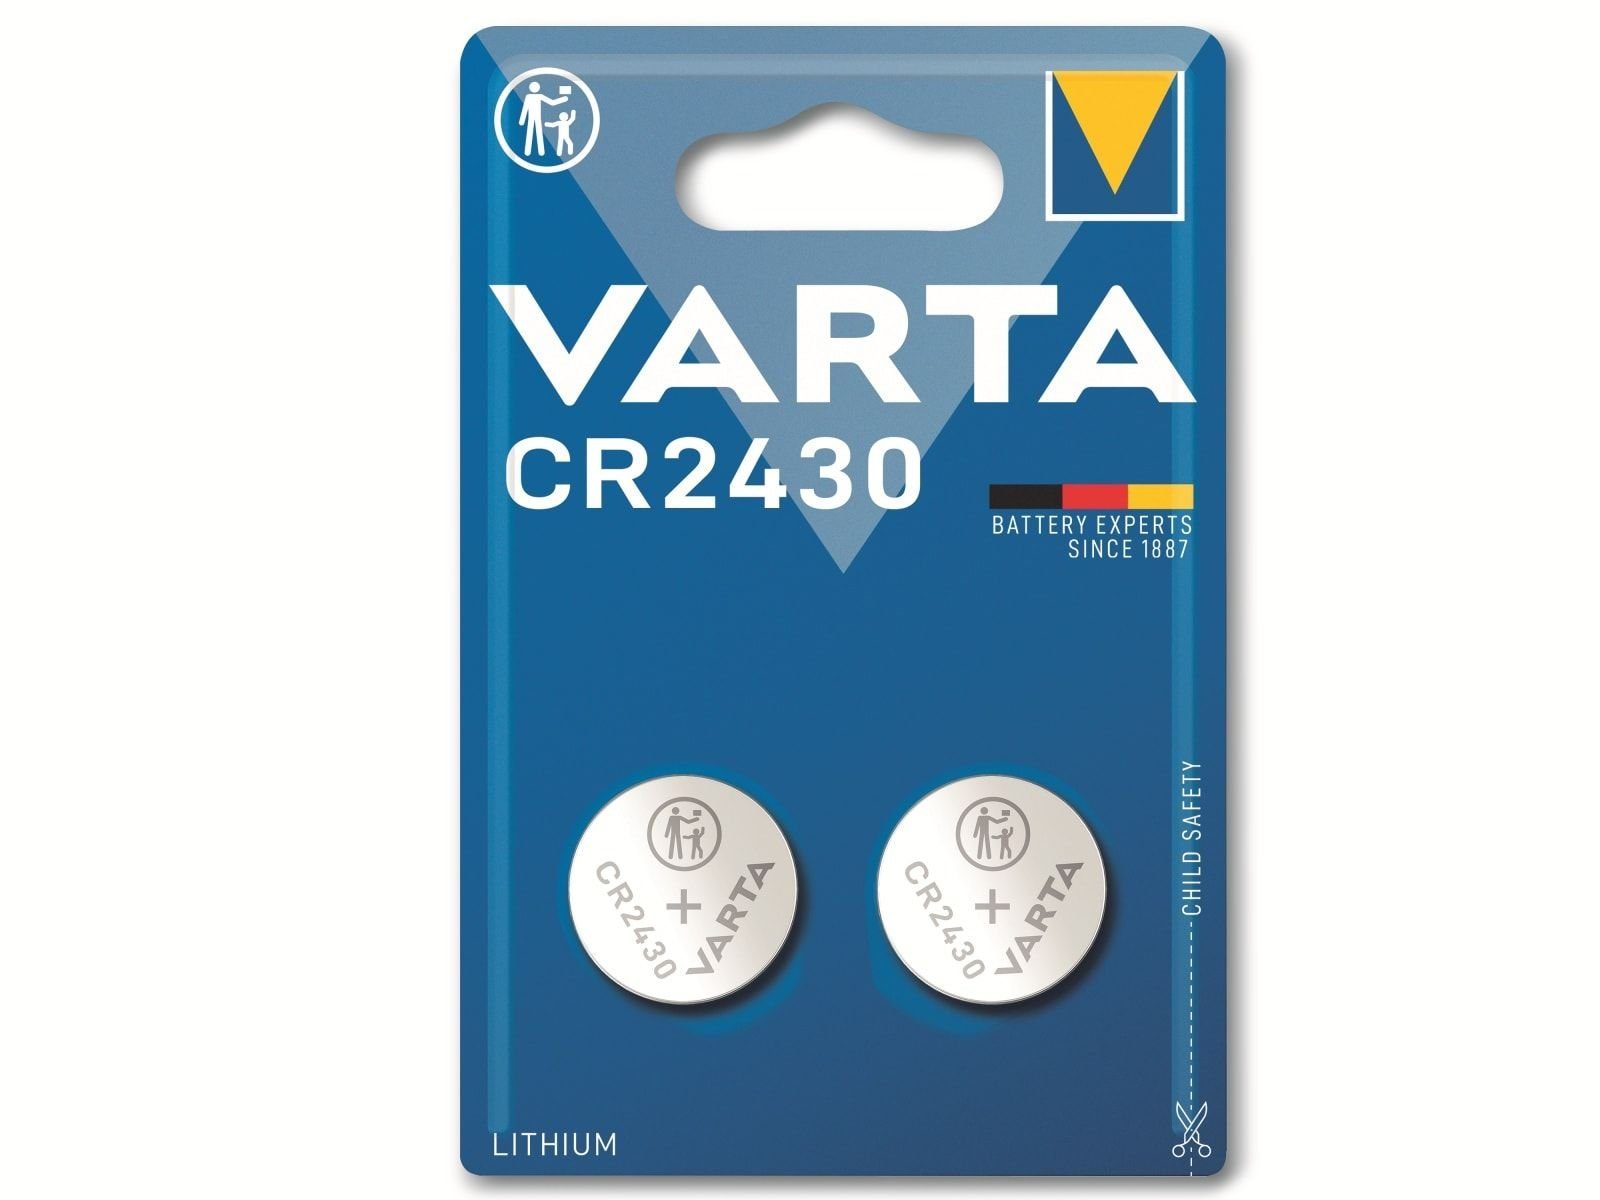 VARTA VARTA Knopfzelle Stück CR2430, 3V Lithium, 2 Knopfzelle